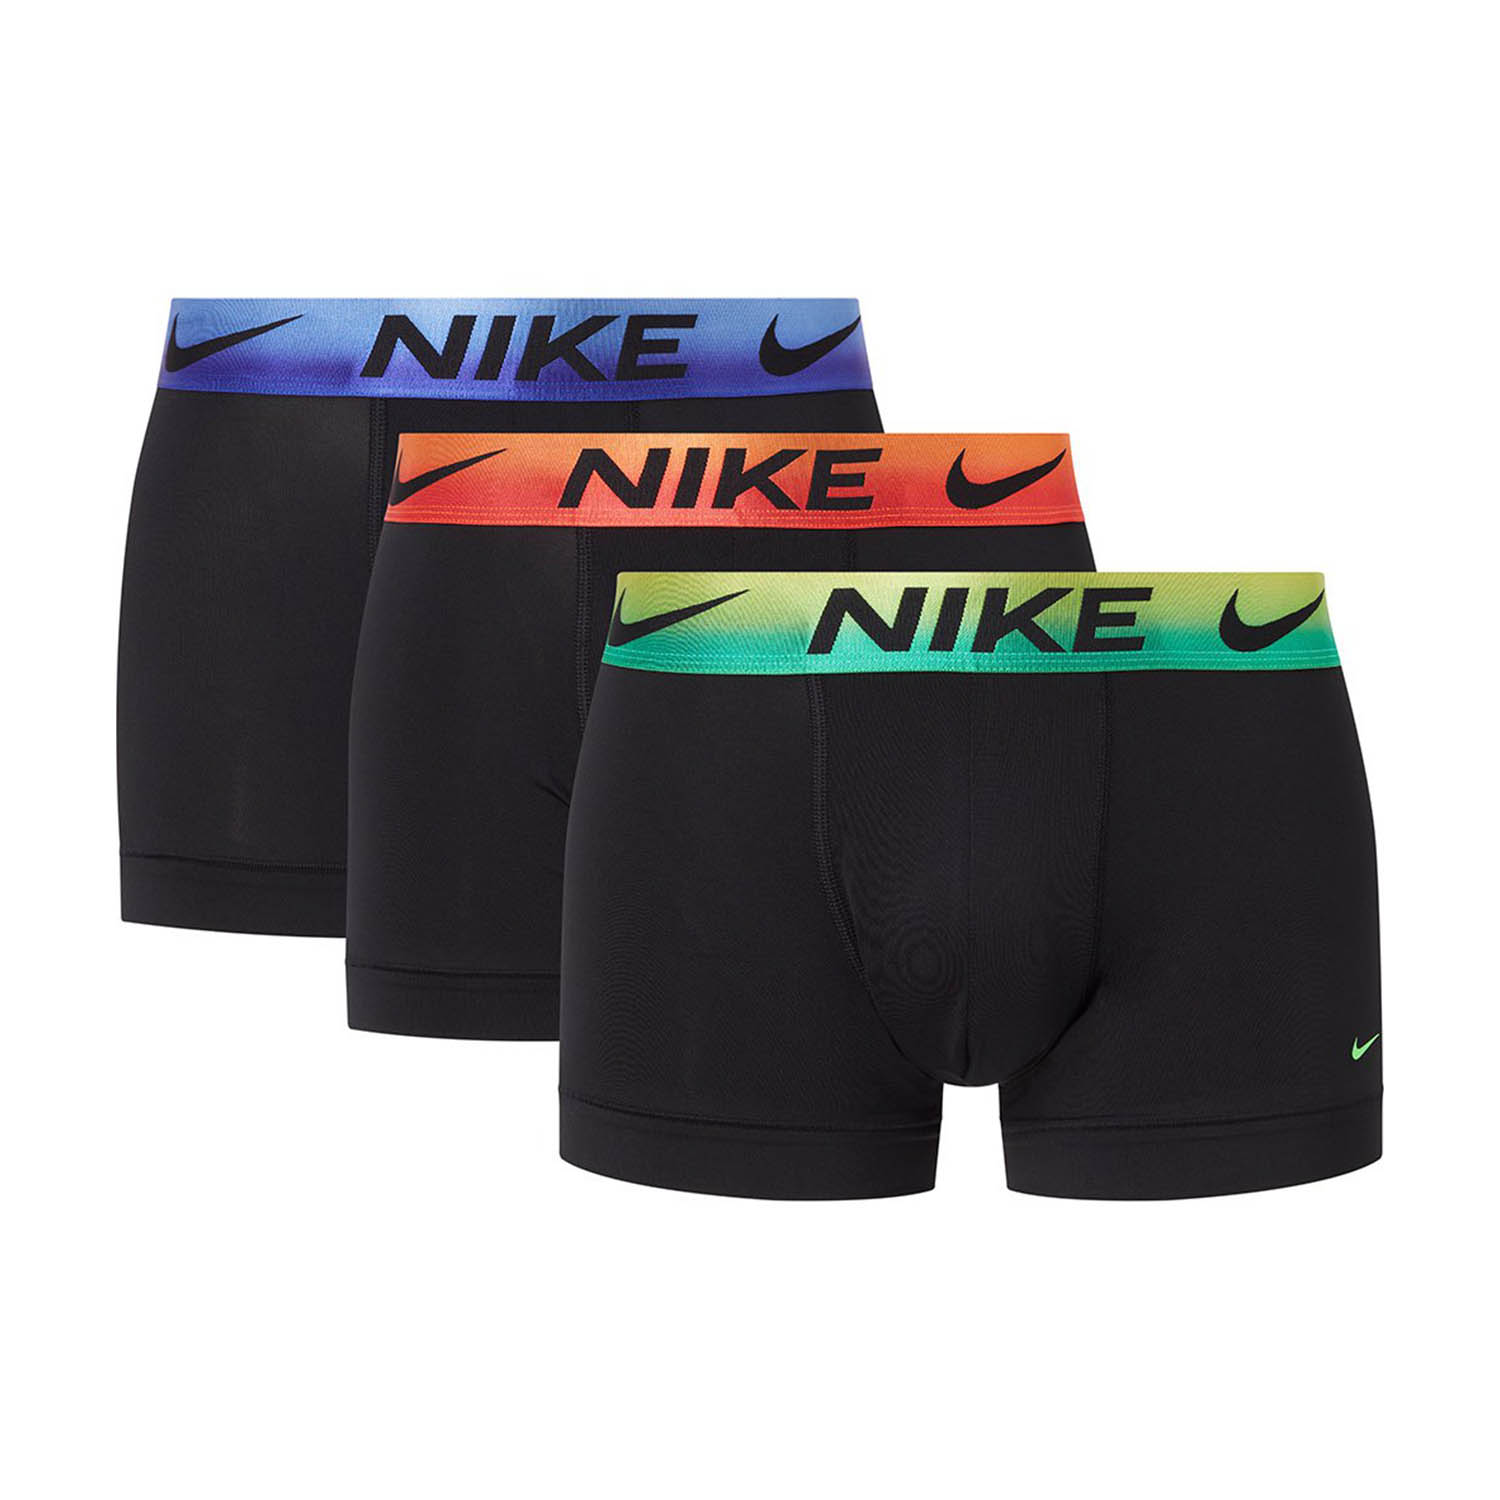 Nike Performance x 3 Men's Underwear Boxer - Black/Gradient